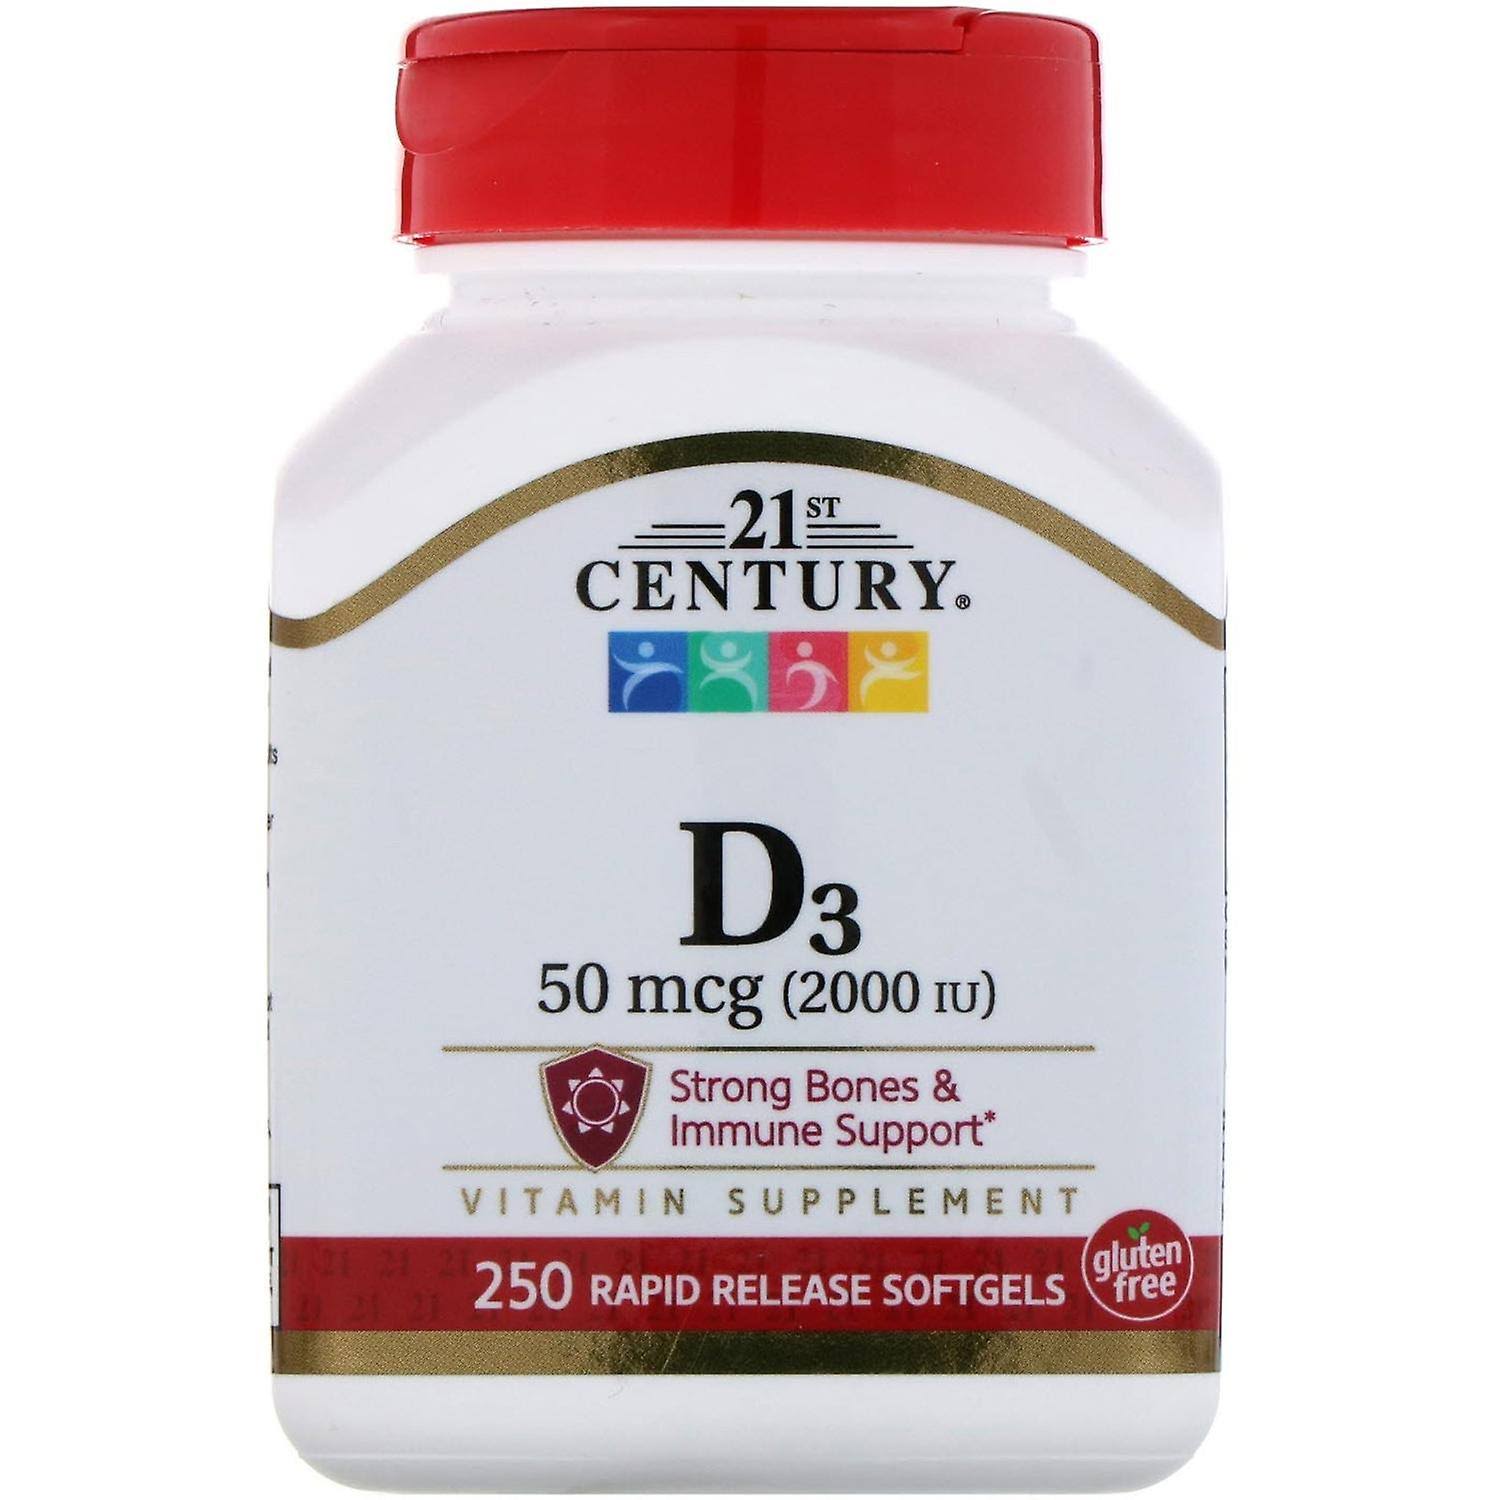 21st Century Vitamin D3 Liquid Softgels Supplement - 250ct